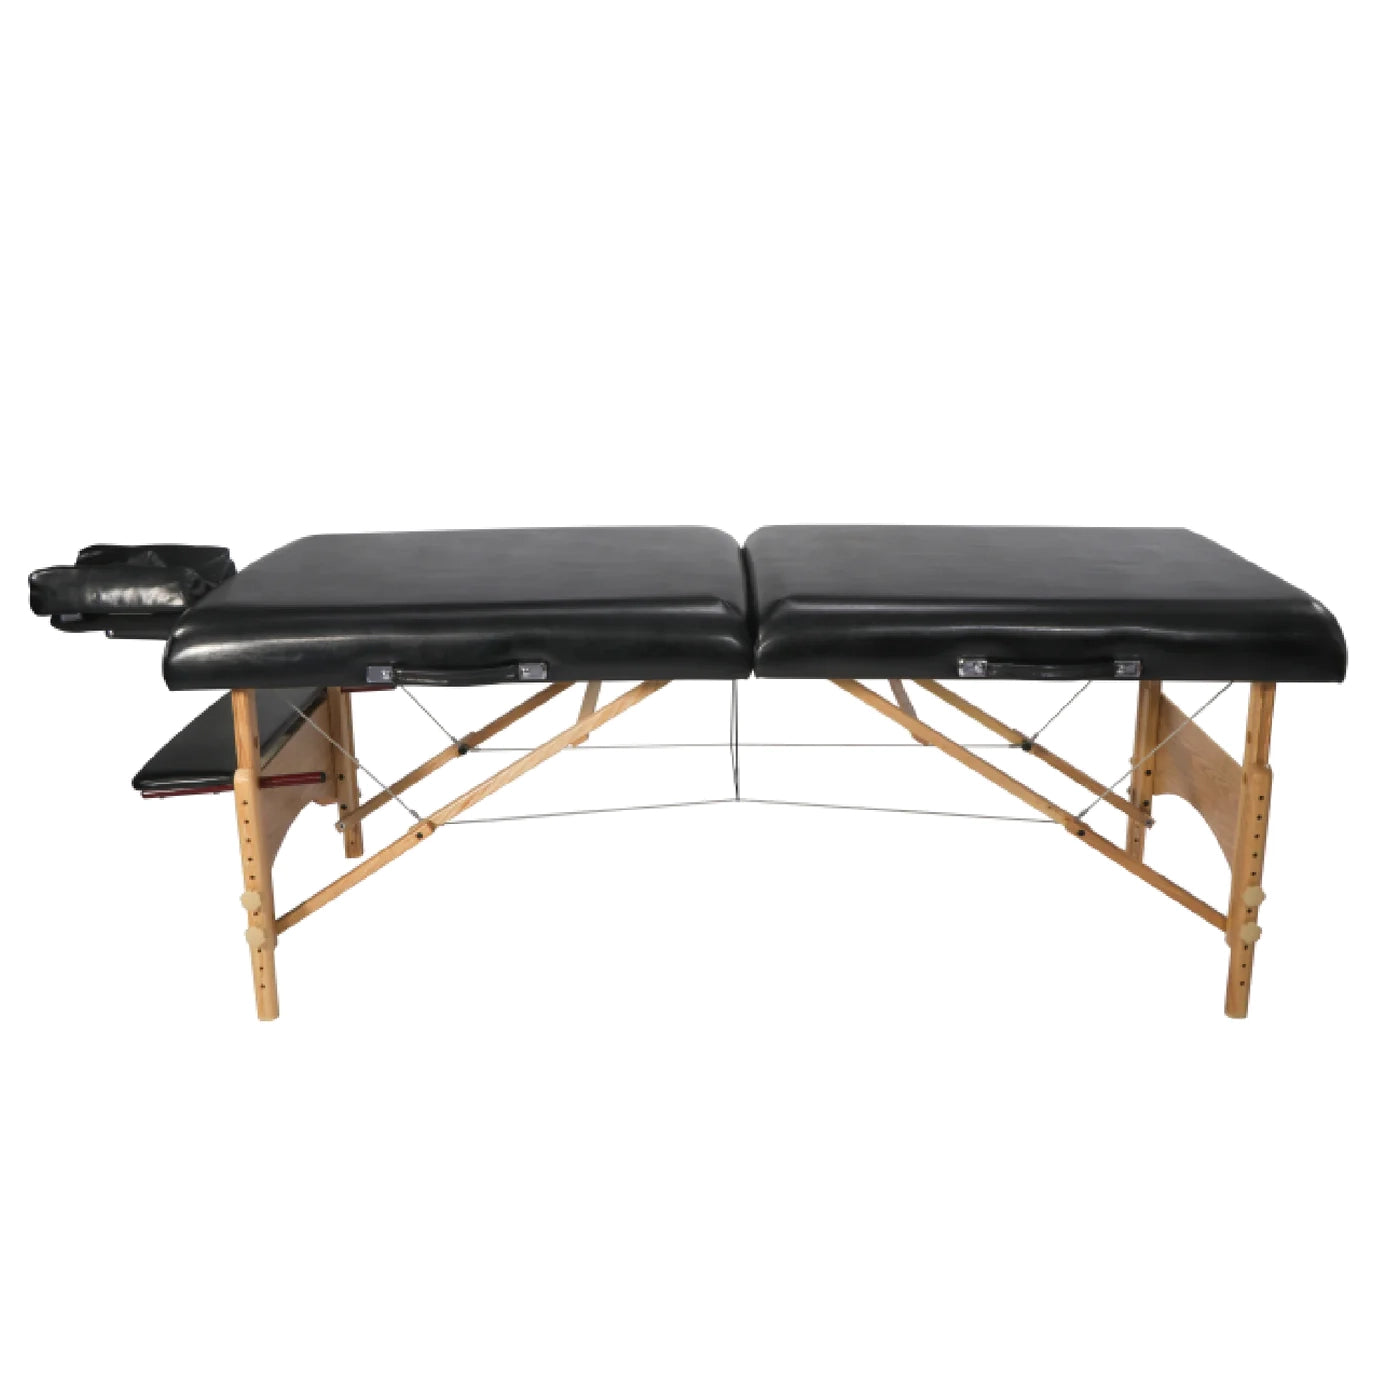 Spabodega 32" HUSKY GIBRALTAR™ XXL Portable Massage Table Package